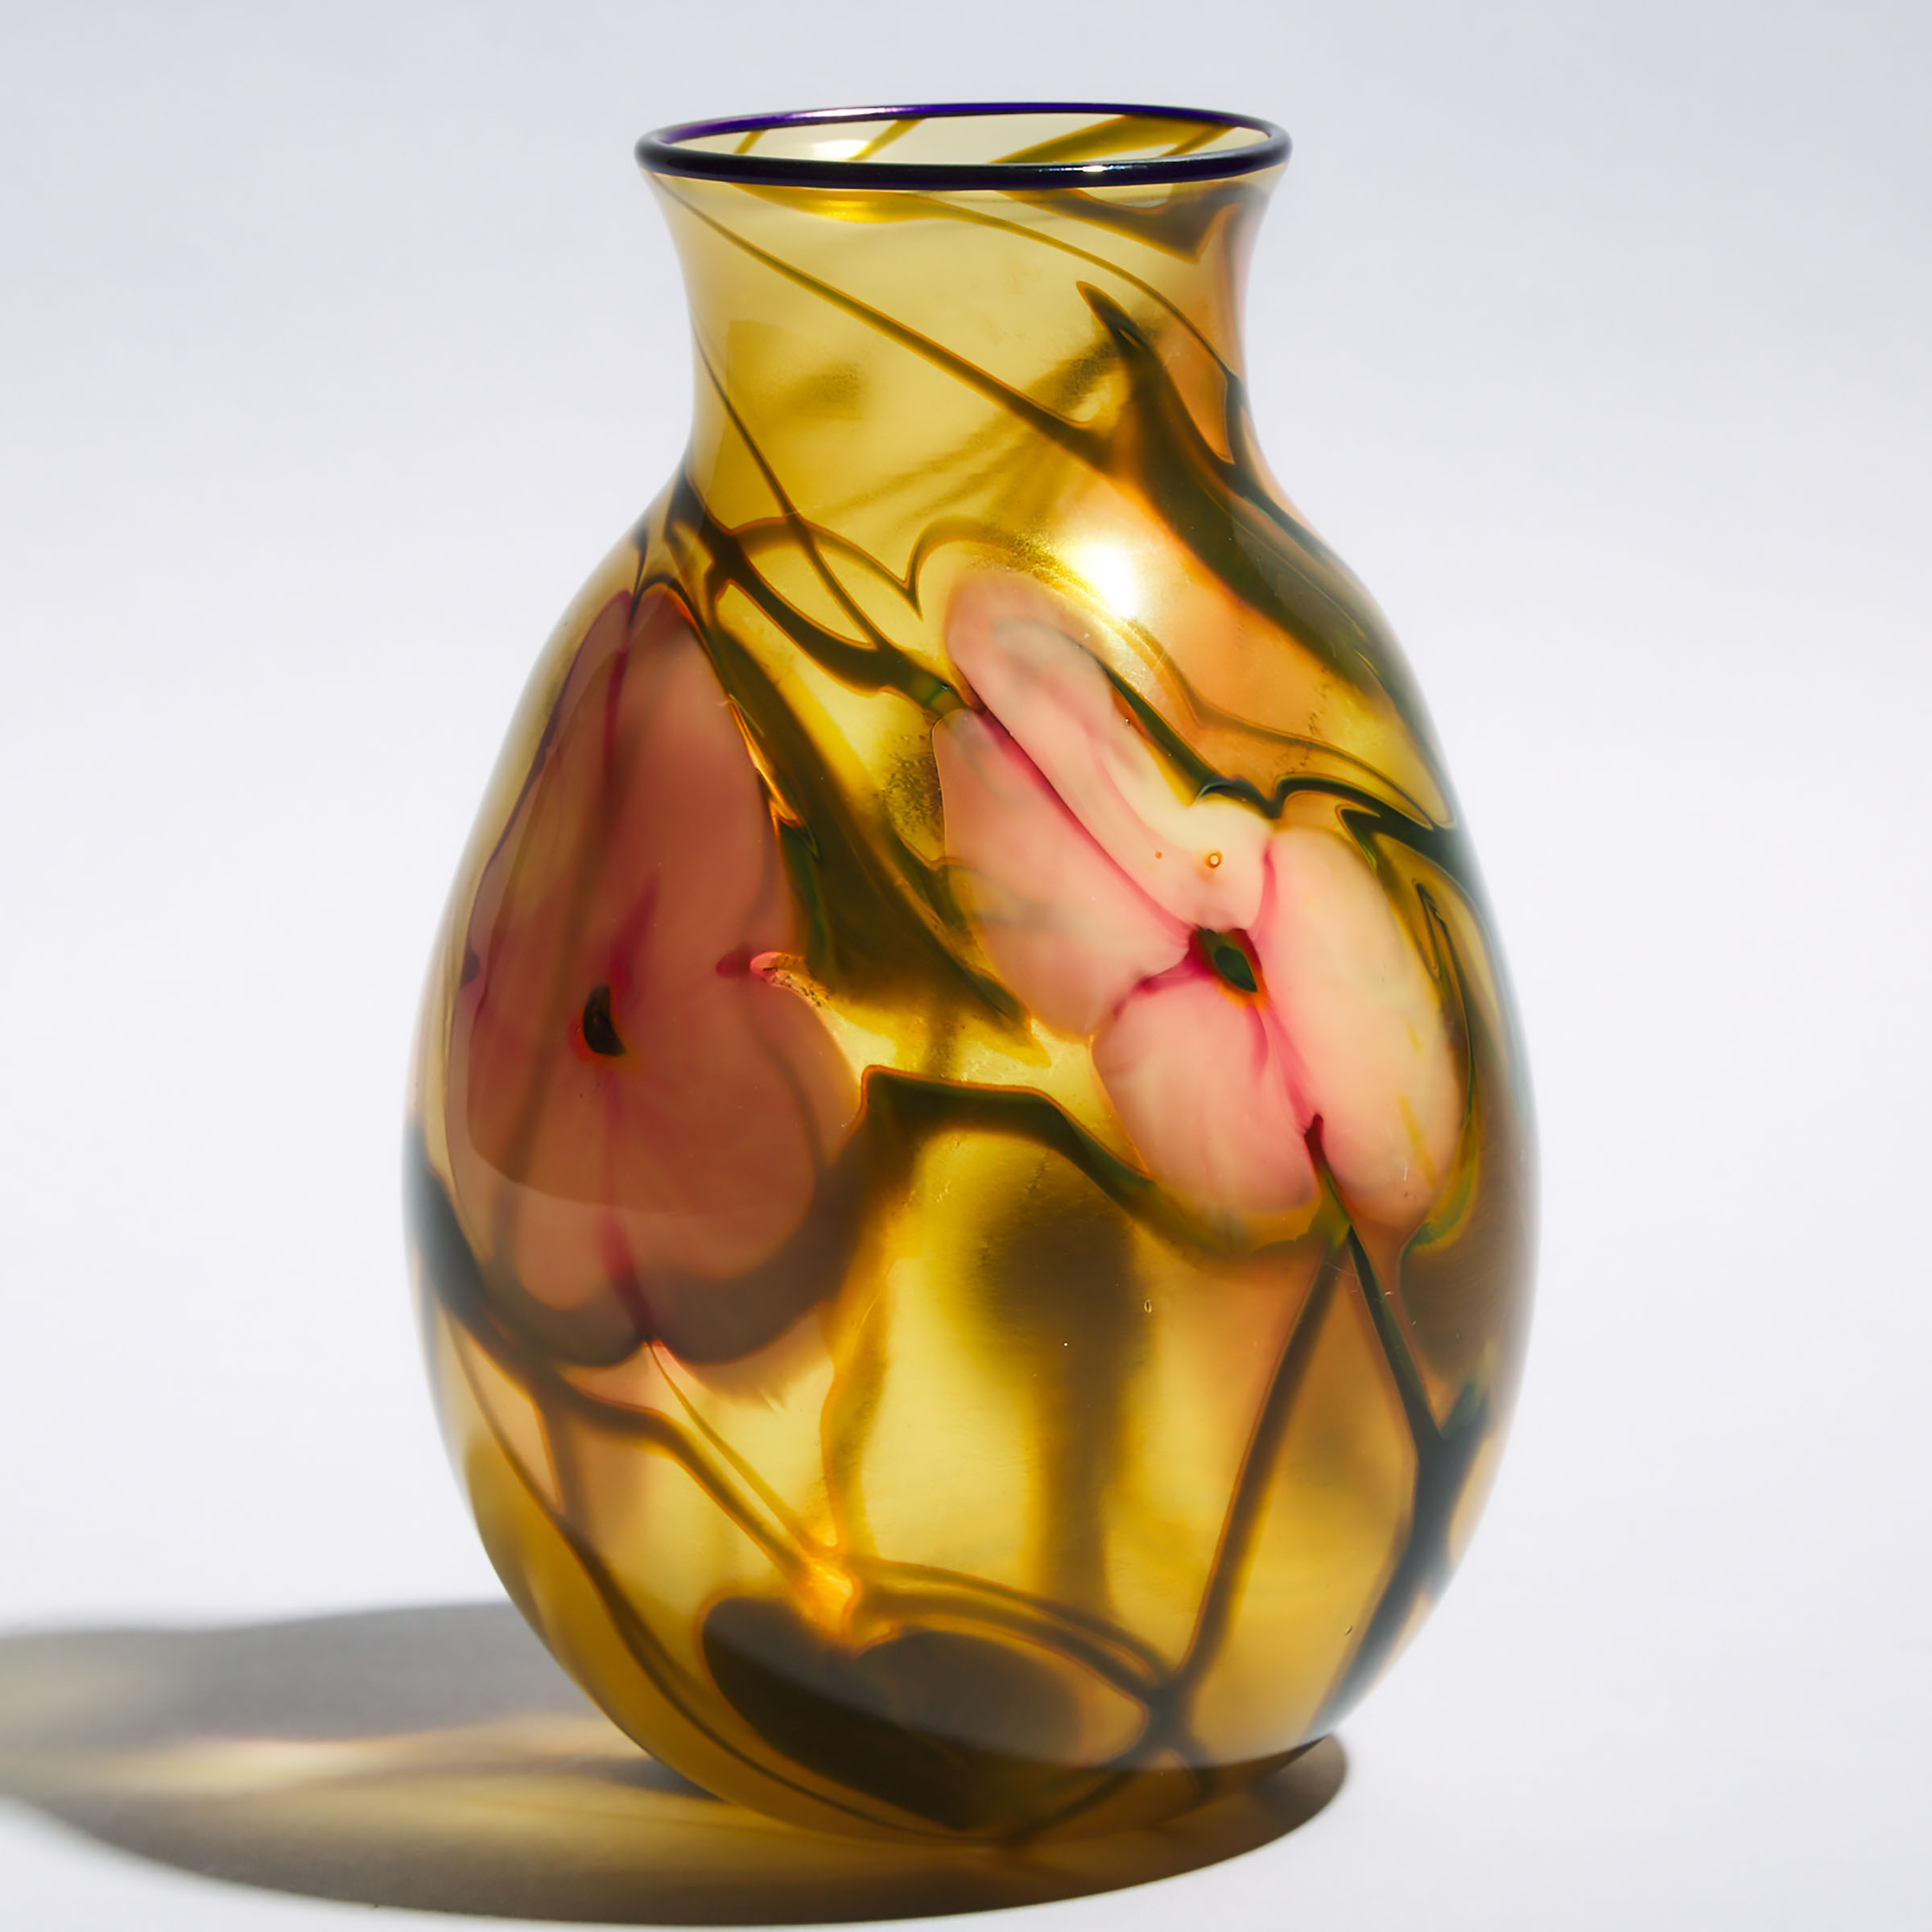 Charles Lotton (American, b.1935), 'Multi-Flora' Glass Vase, dated 1977